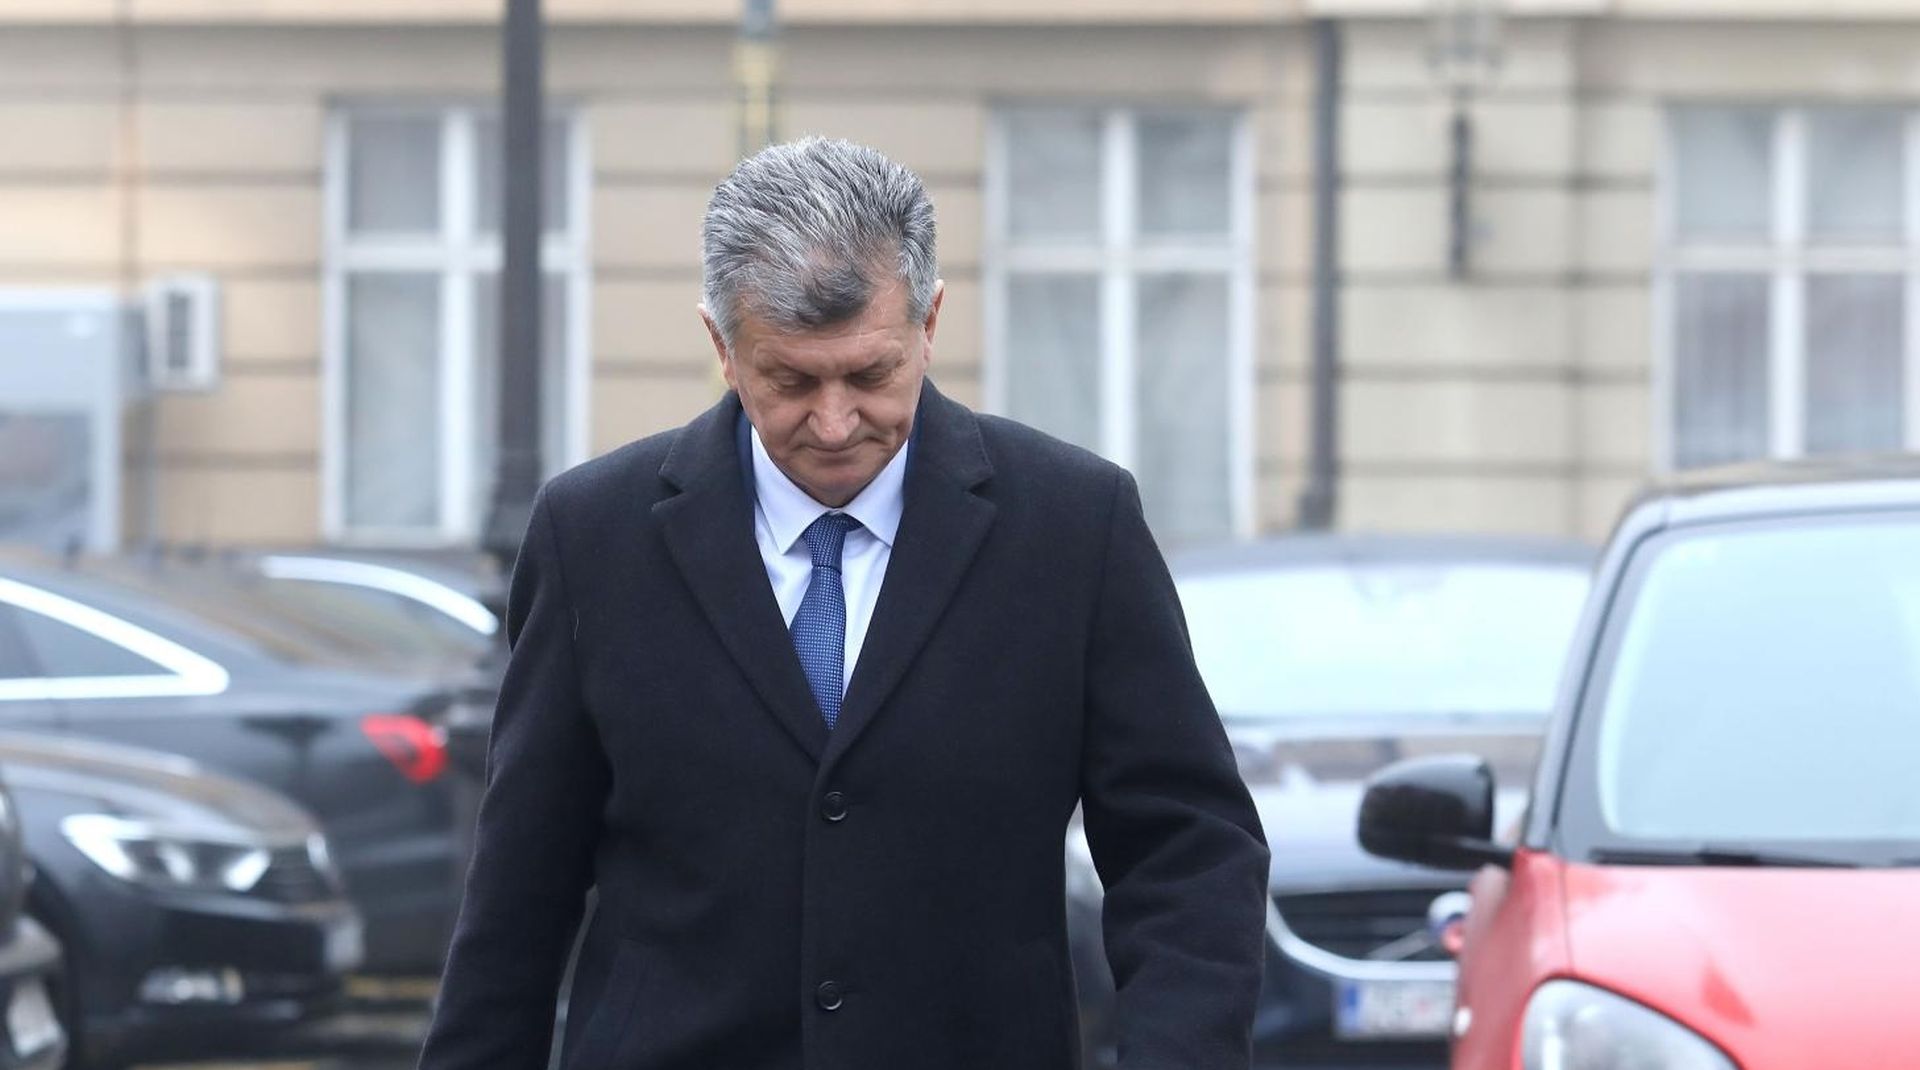 27.01.2020., Zagreb - Ministar zdravstva Milan Kujundzic dolazi u Banske dvore. Photo: Patrik Macek/PIXSELL